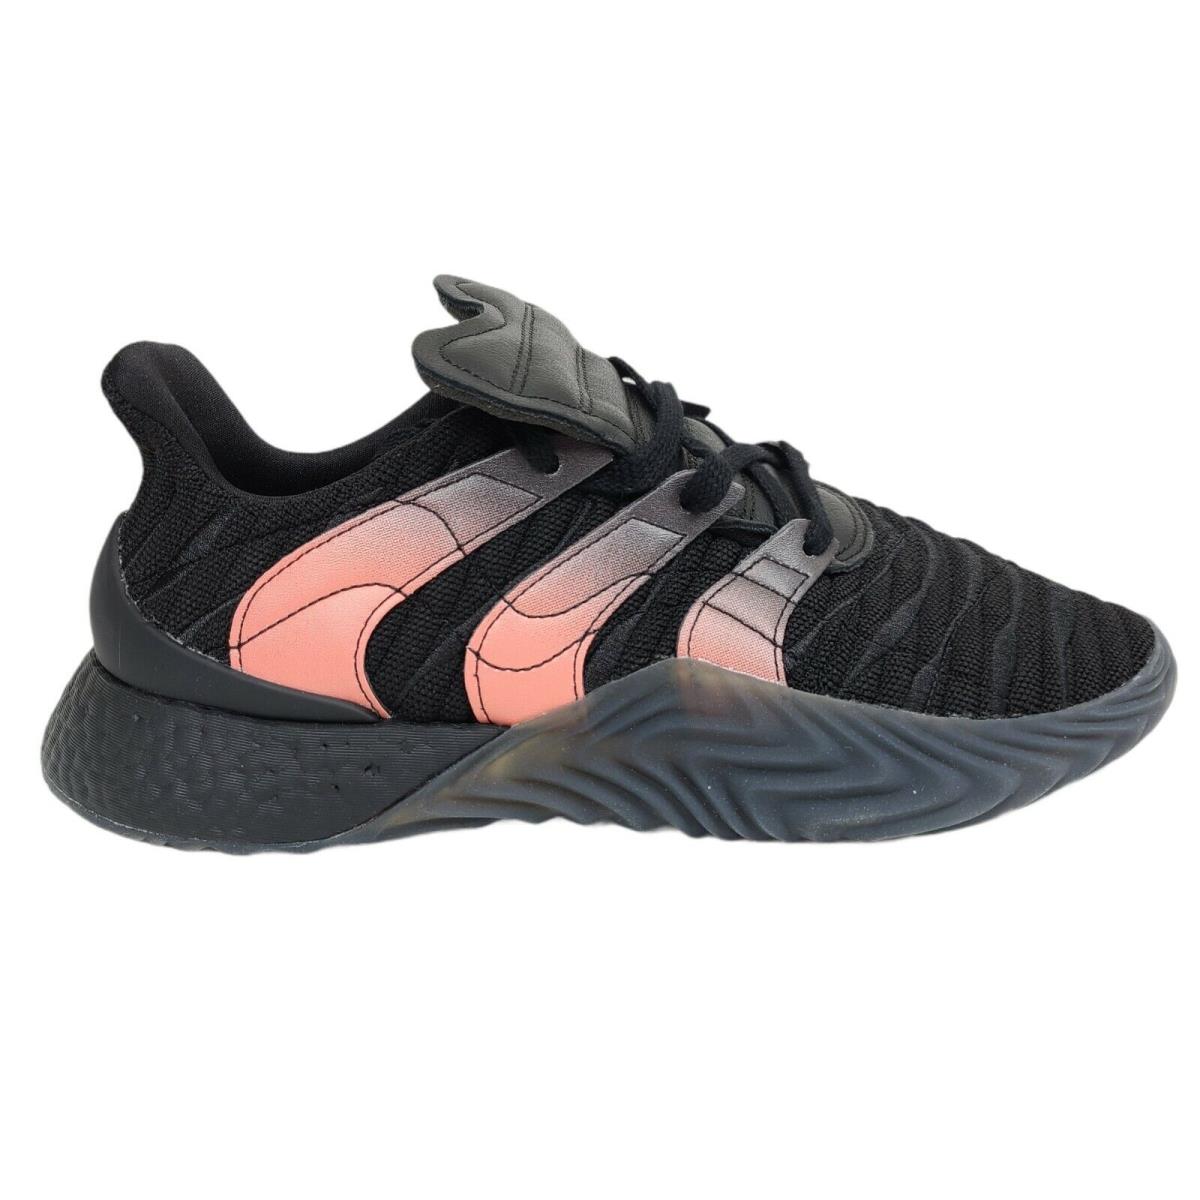 Adidas Originals Mens 10 Sobakov 2.0 Boost Black Lifestyle Sneakers Shoes EE5632 - Black, Manufacturer: core black/solar orange/core black